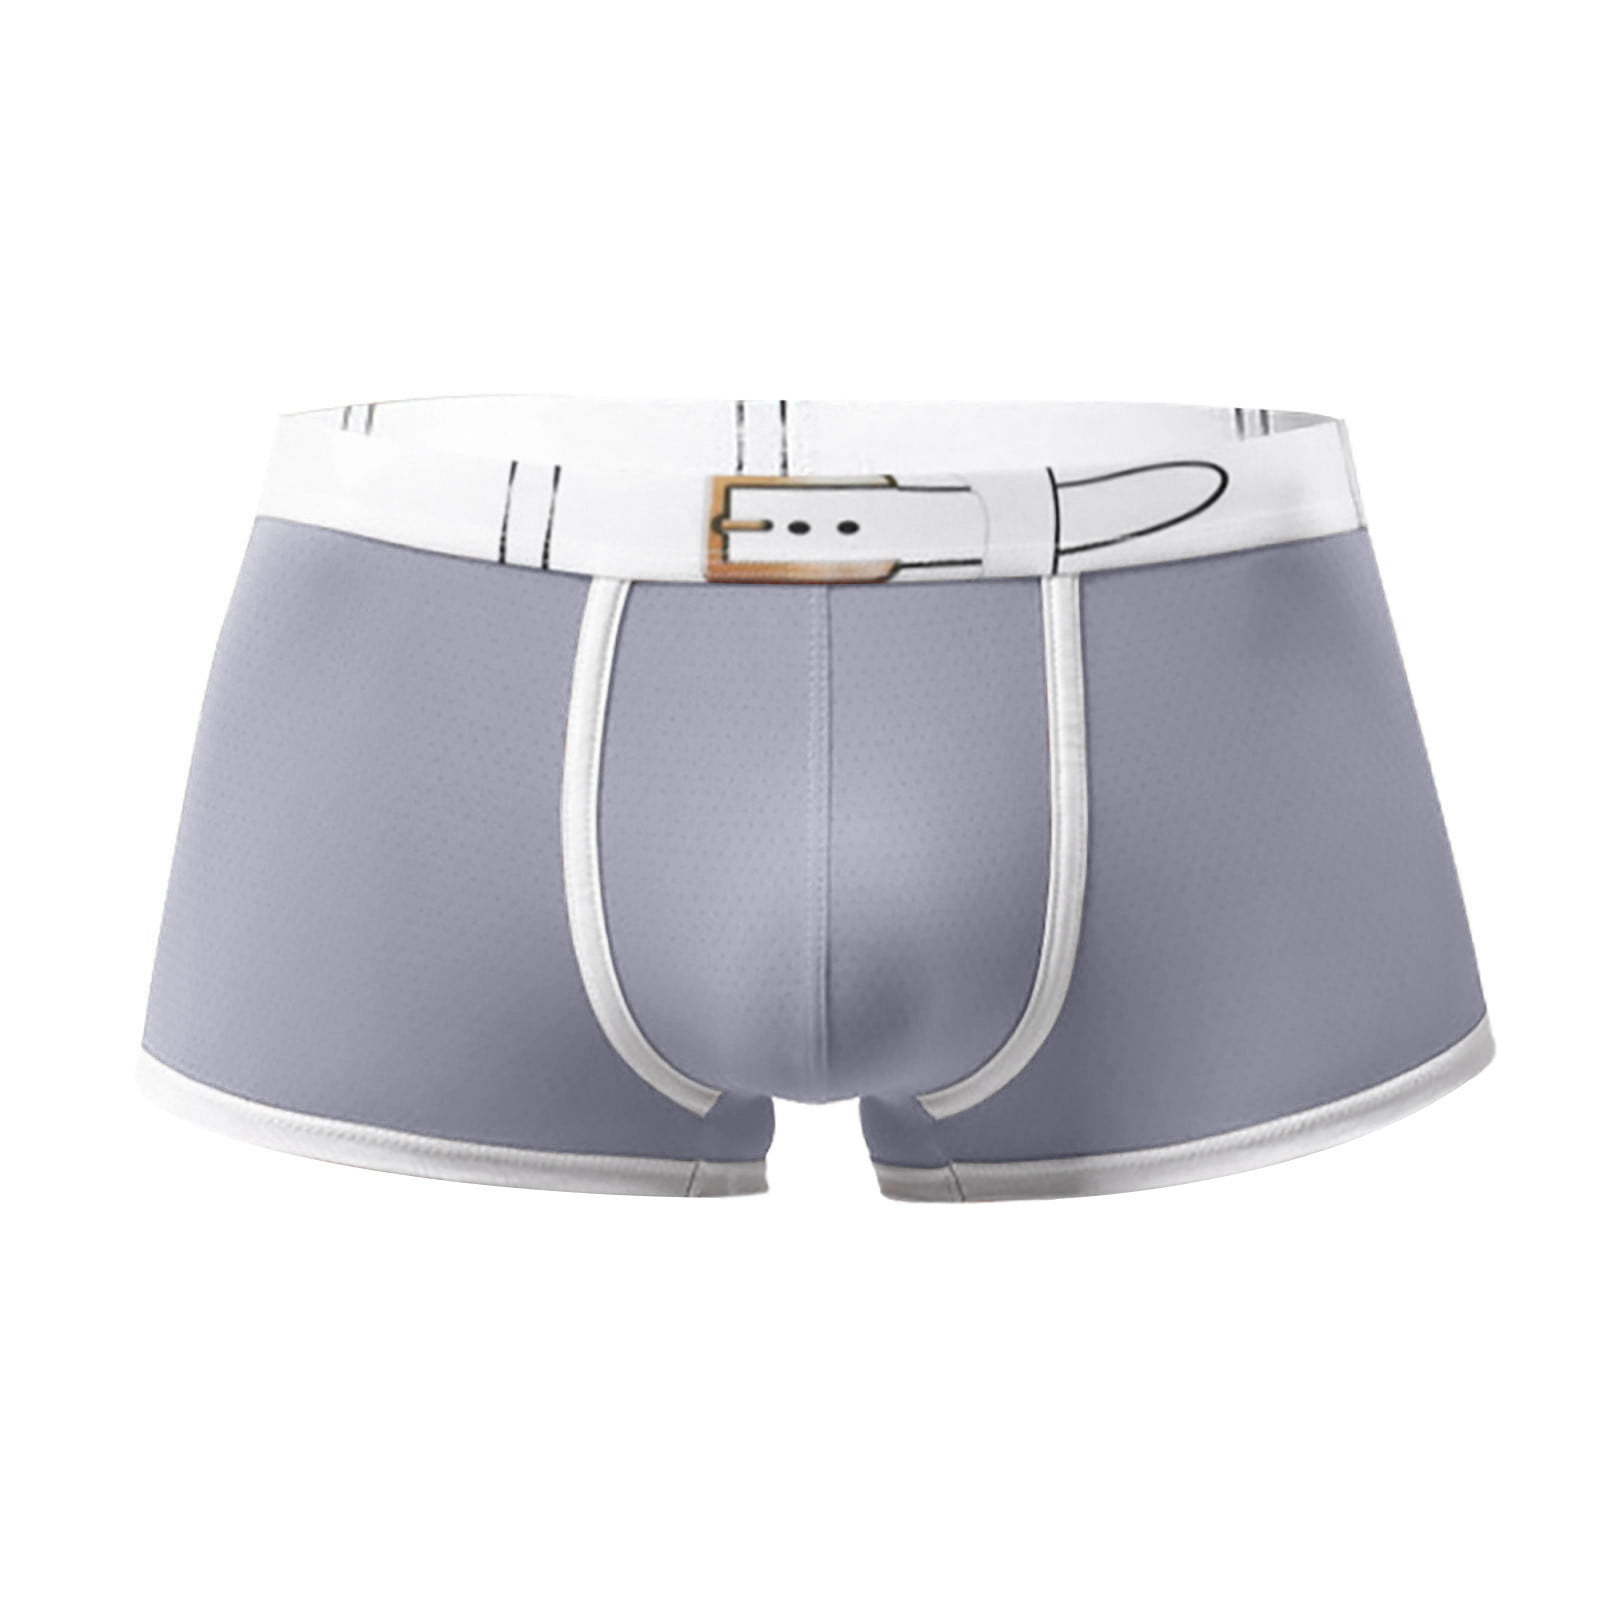 PMUYBHF Male Men's Thermal Underwear Bottoms Cotton Mens Lightweight Smooth  Boyshort Comfortable Casual Solid Color Underwear Aloud Pants Men Boxers  Briefs Long Leg 